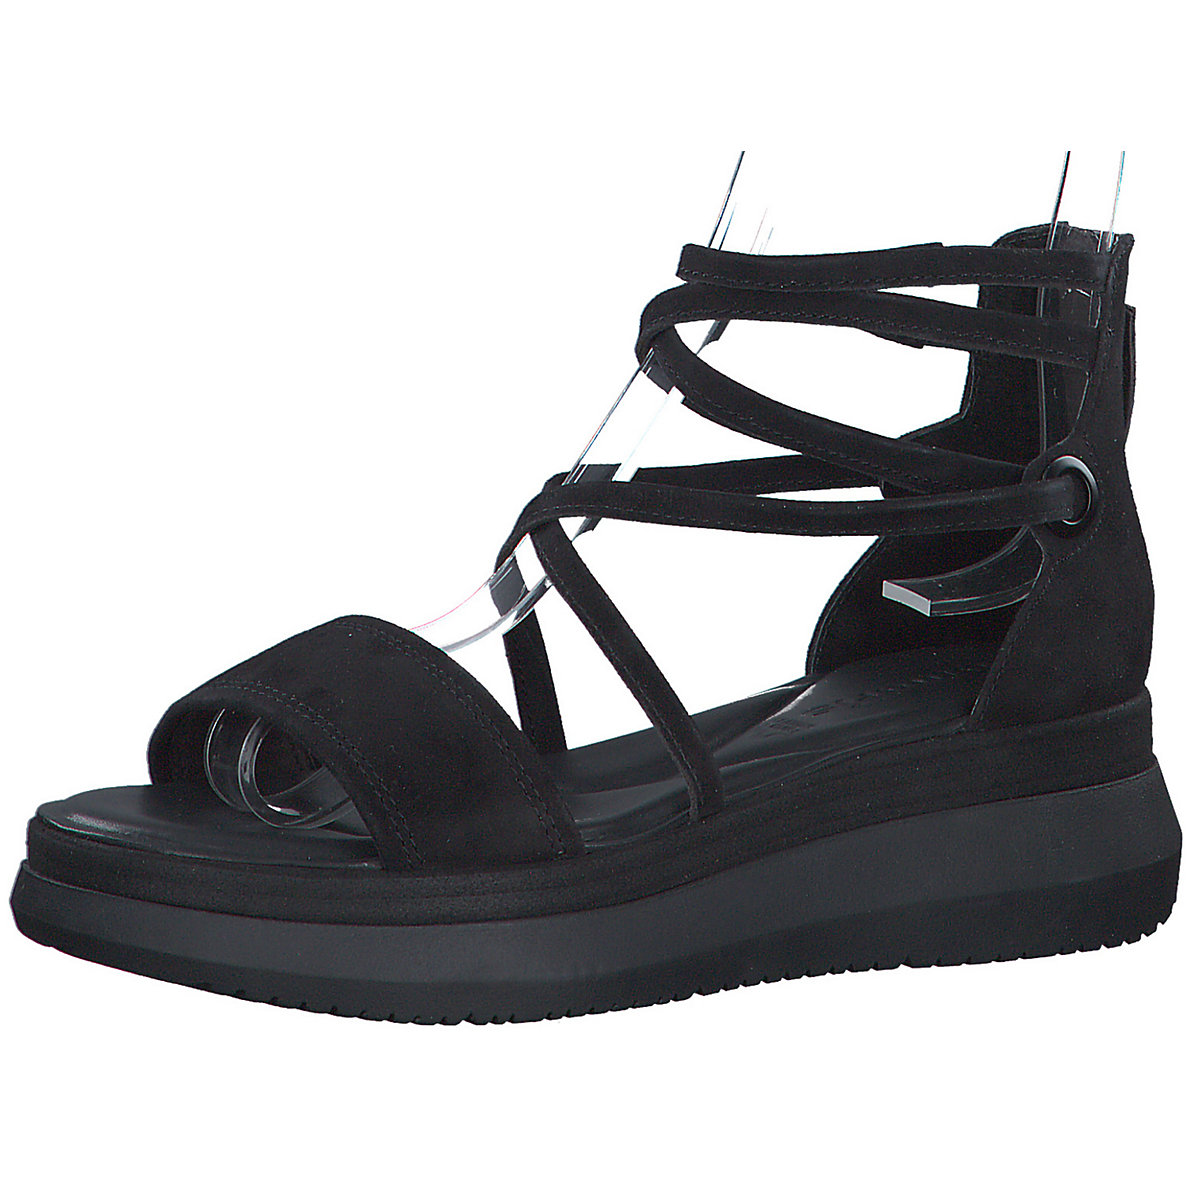 Tamaris Damen Sandalen 1-28307-20 Schwarz 001 Black Leder Klassische Sandalen schwarz